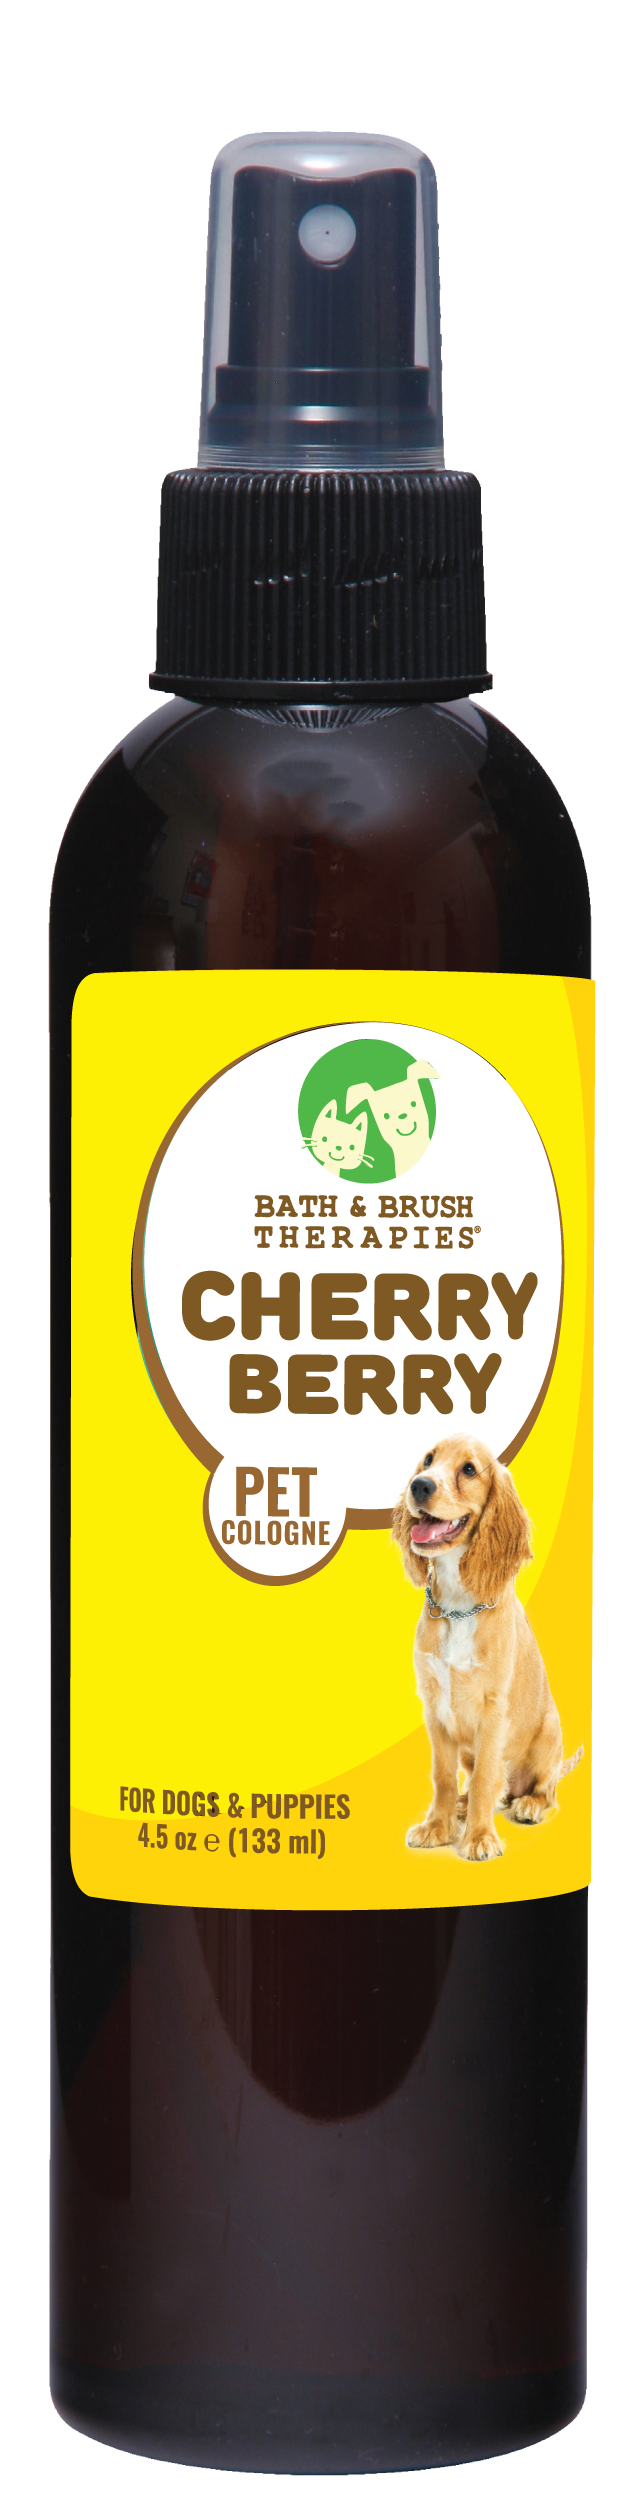 Cherry Berry Pet Cologne